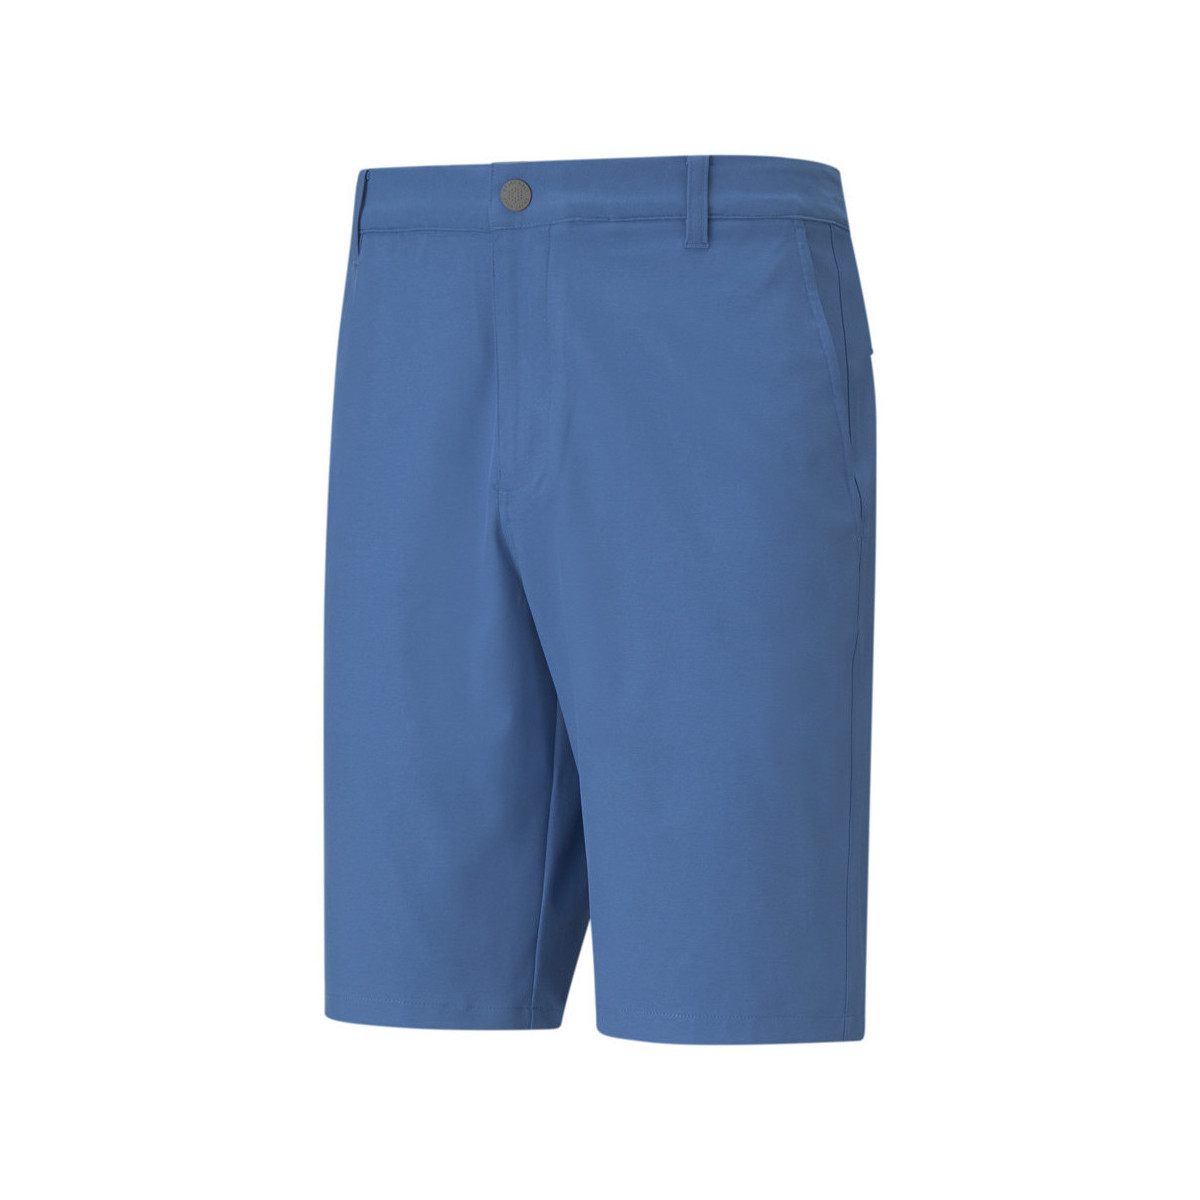 Vêtements Homme Shorts / Bermudas Puma 599246-08 Bleu